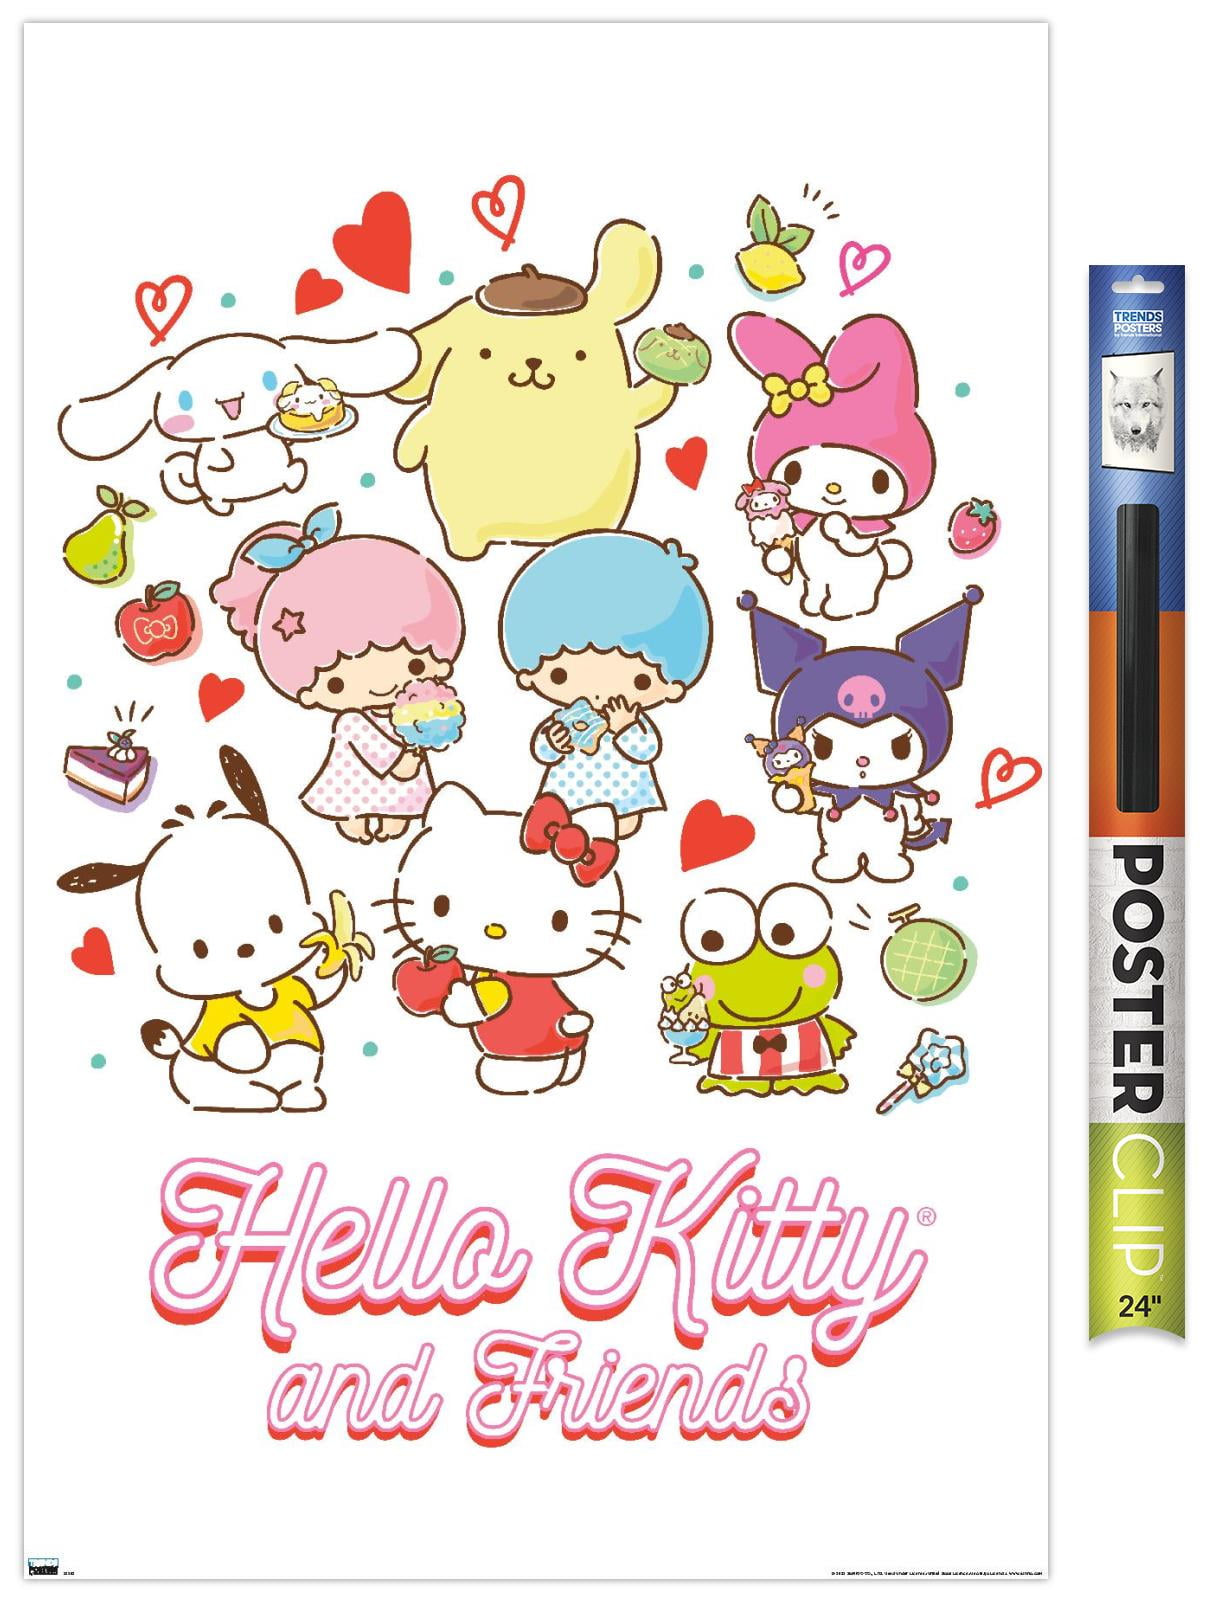 Trends International Hello Kitty-Stars Wall Poster, 22.375 x 34, Premium  Poster & Mount Bundle